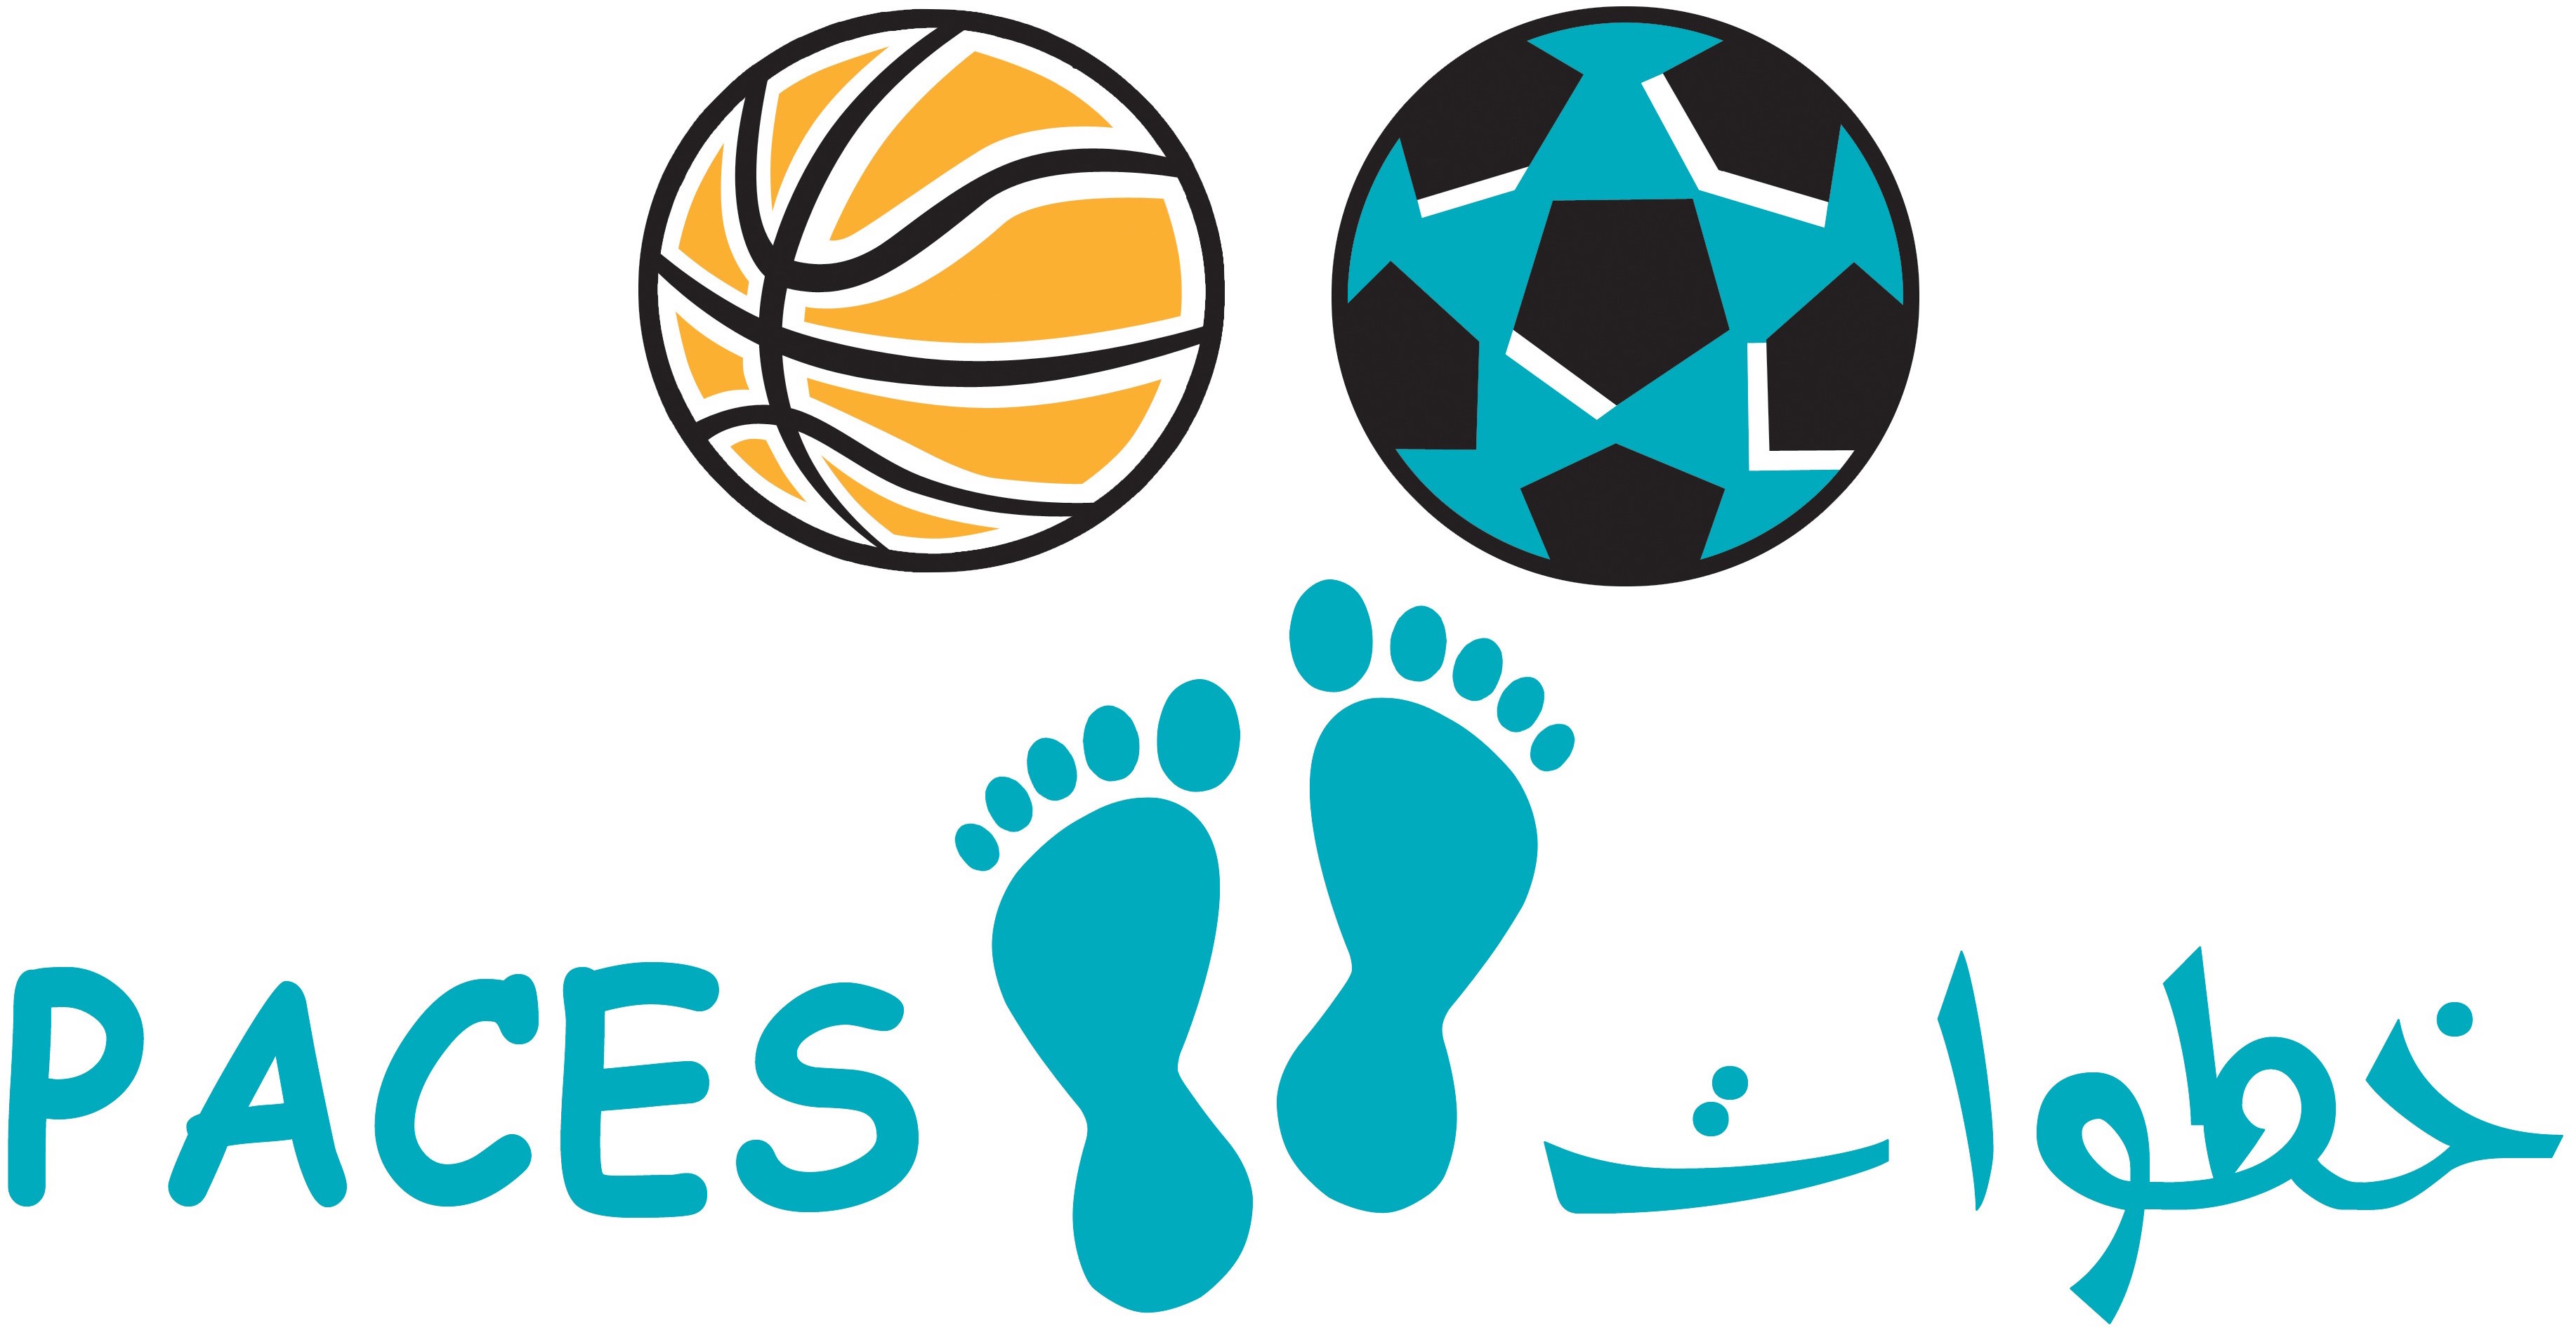 Palestine Association for Children's Encouragement of Sports - PACES